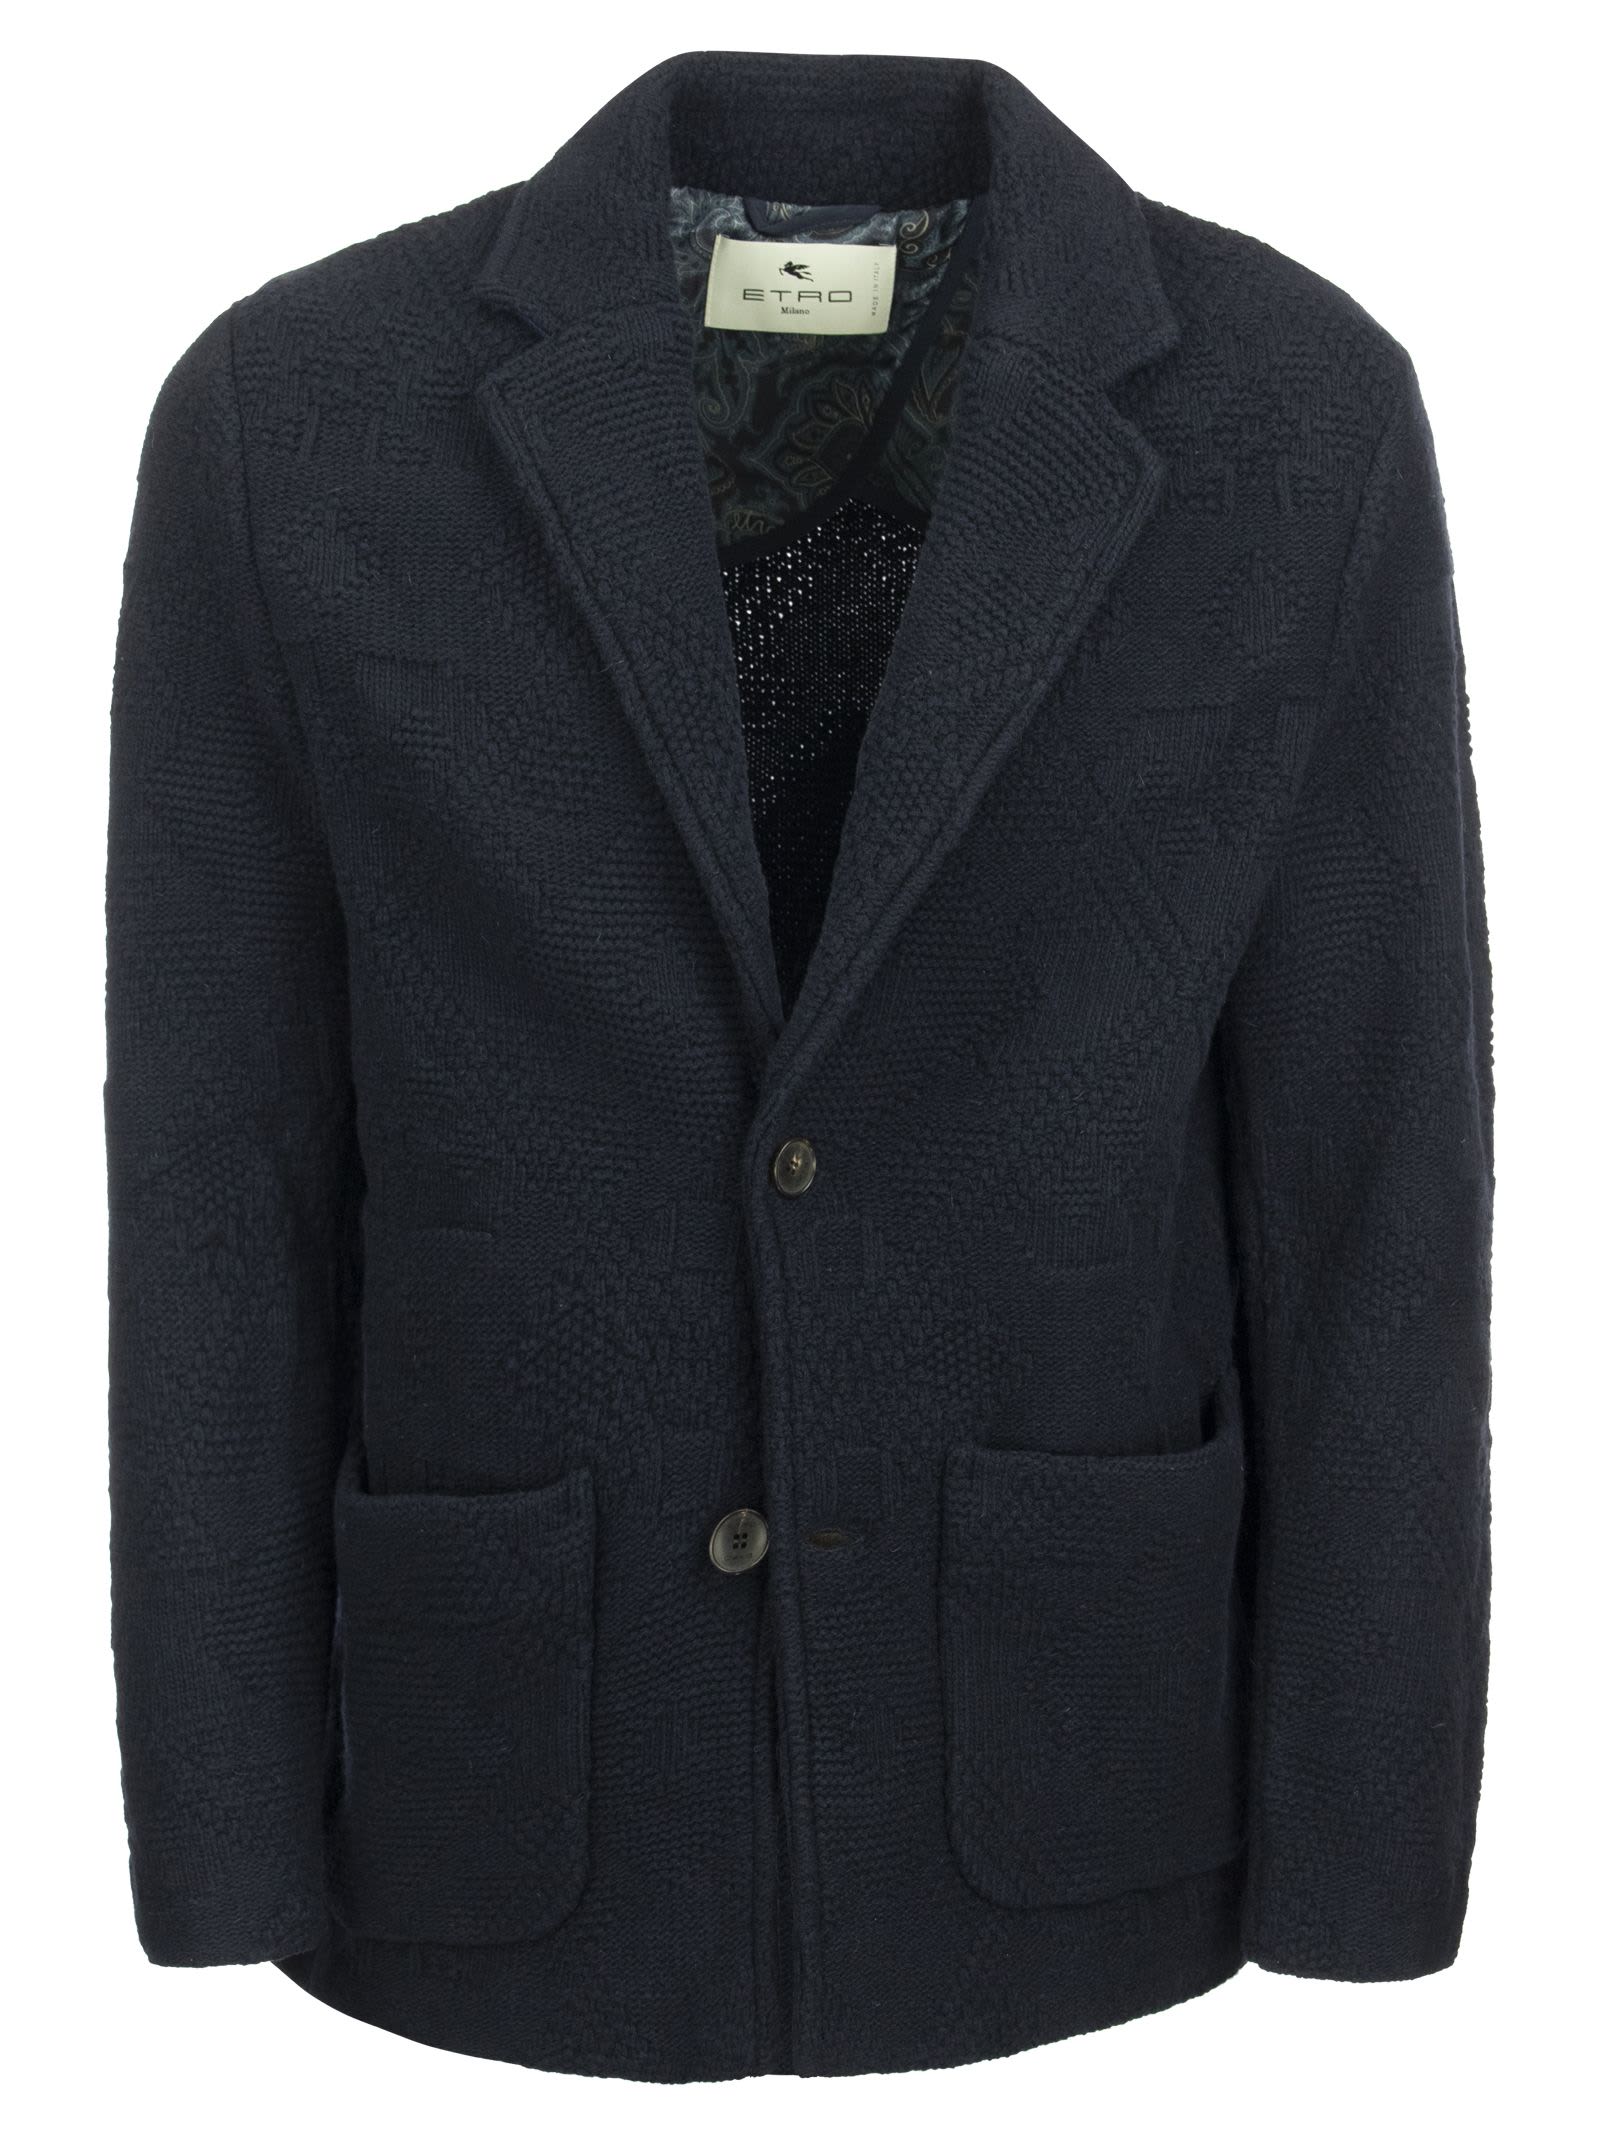 Etro Wool-blend Jacket